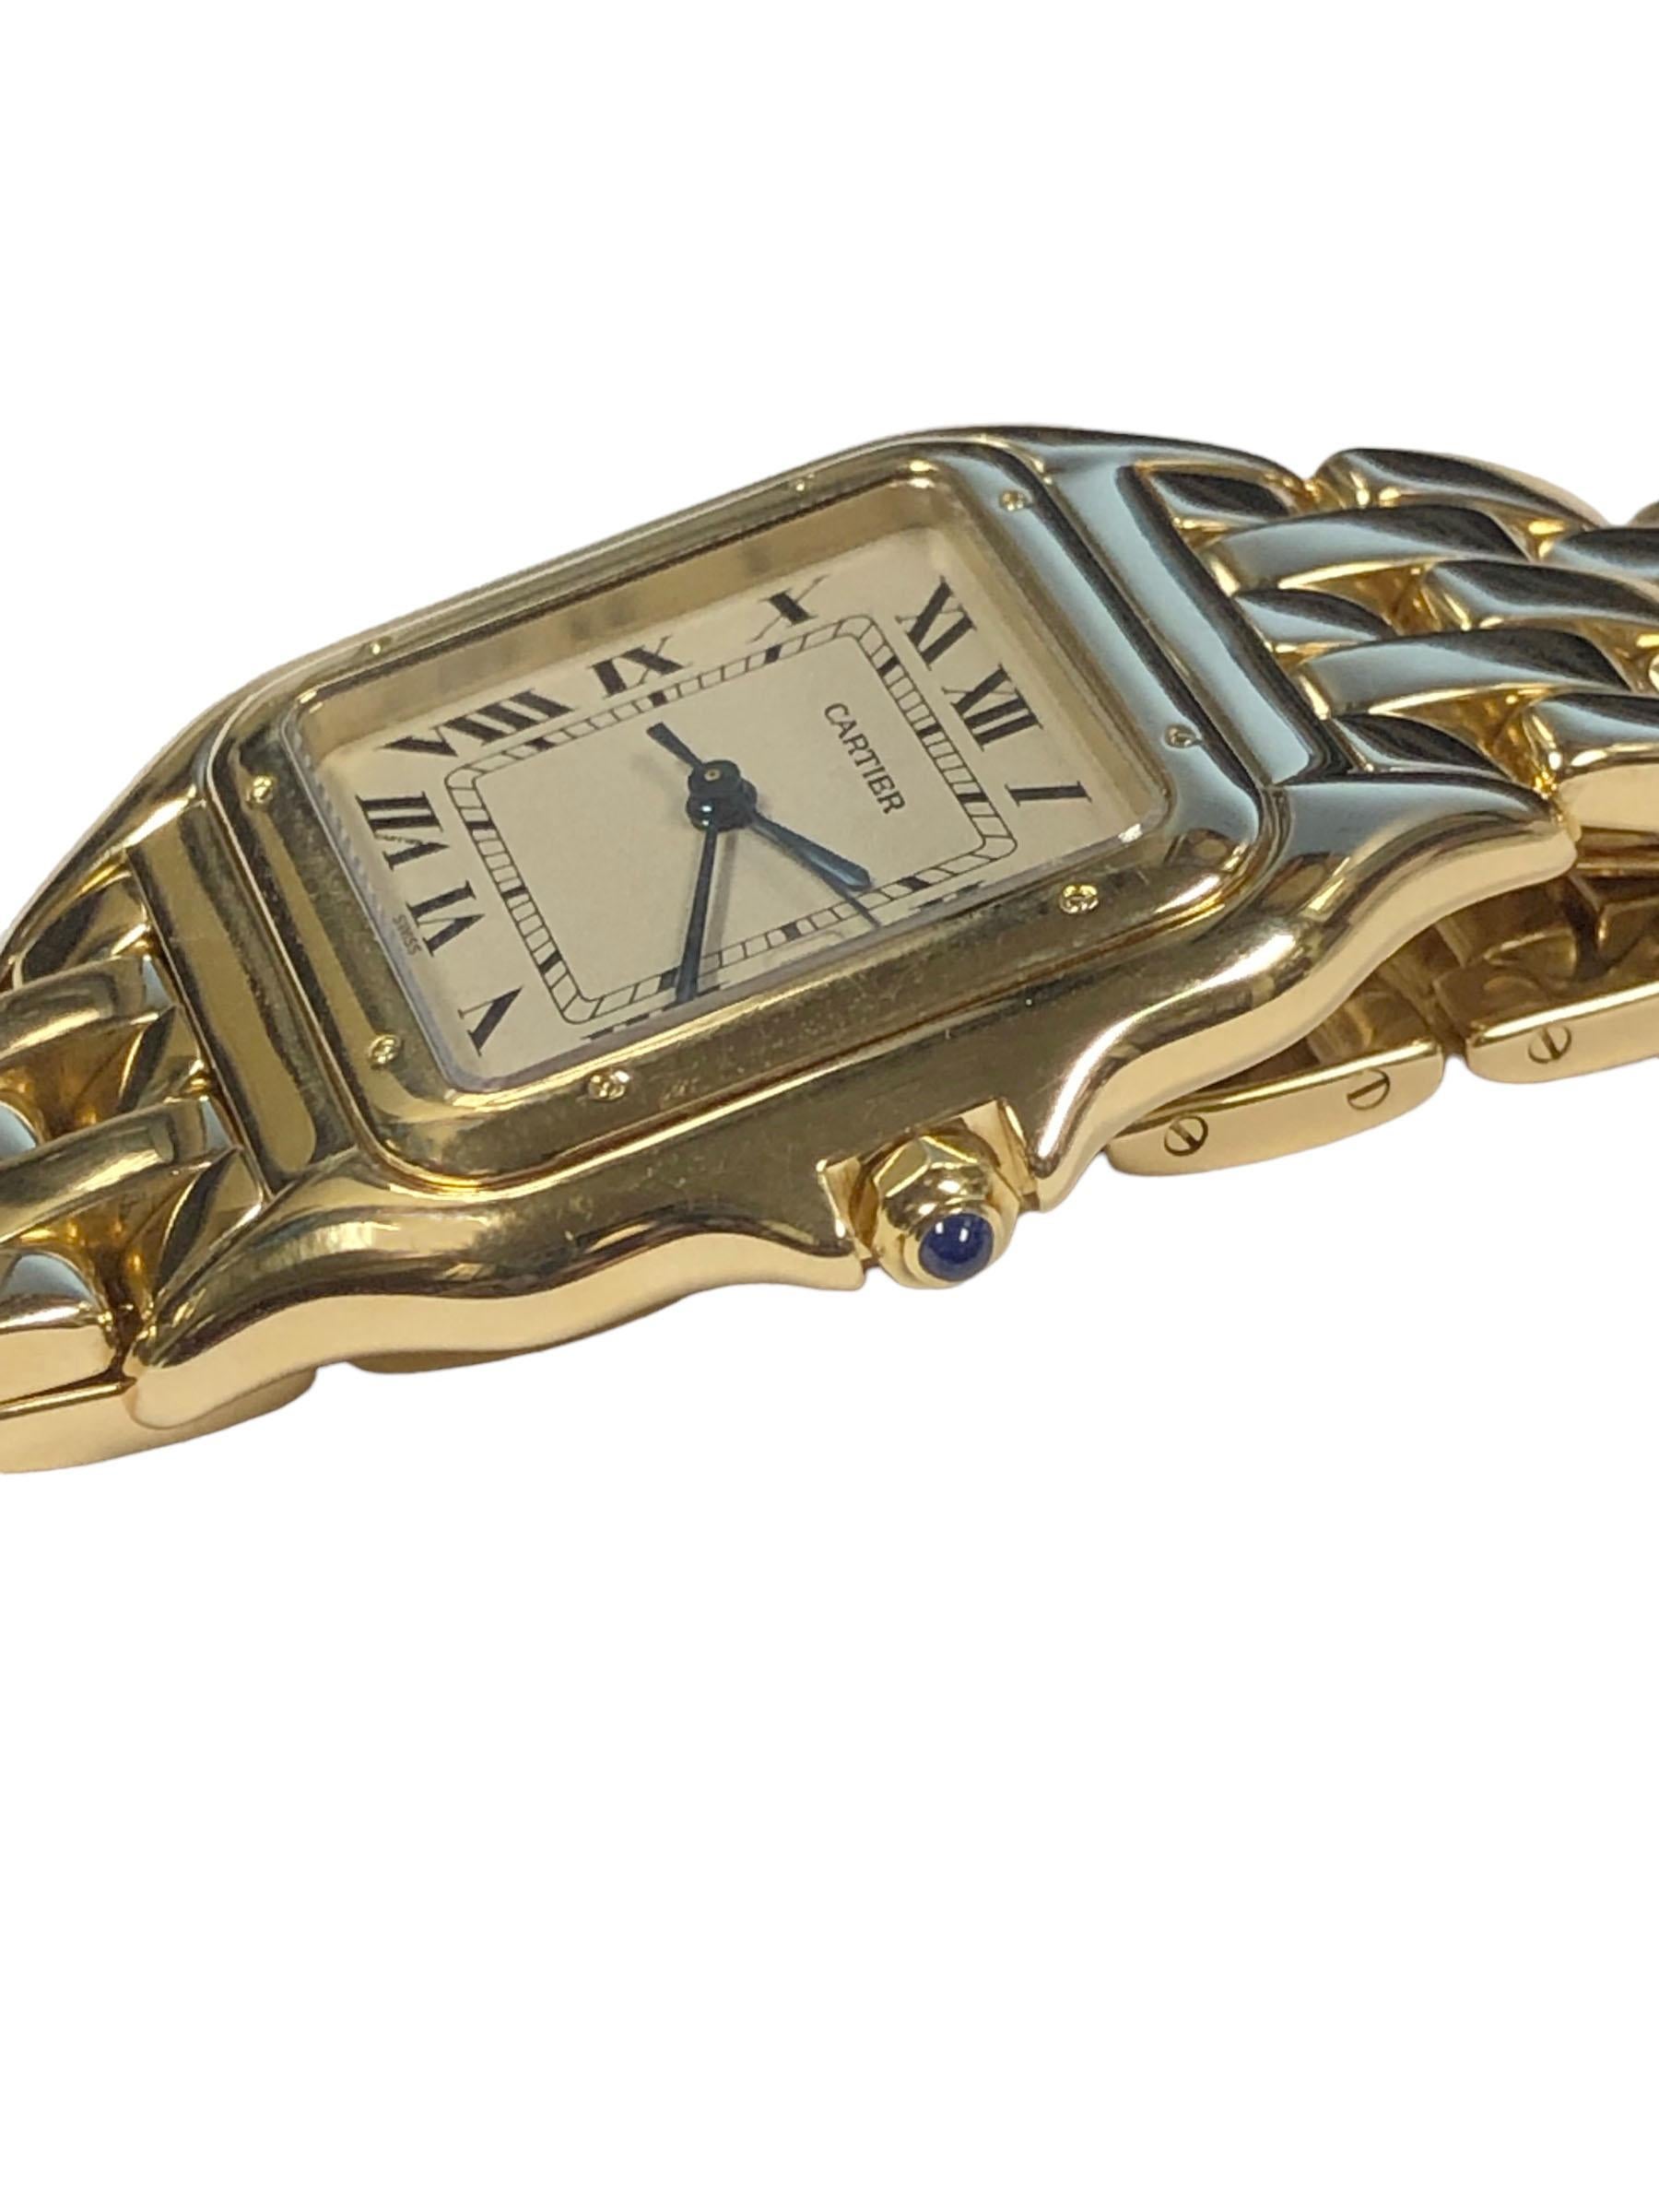 Circa 2000 Cartier Panther collection Montre-bracelet, 29 x 29 M.M. 18k Yellow Gold 3 piece case, Quartz movement, Sapphire Crown, off white dial with Black Roman numerals, calendar window at the 3 position and a sweep seconds hand. Bracelet à